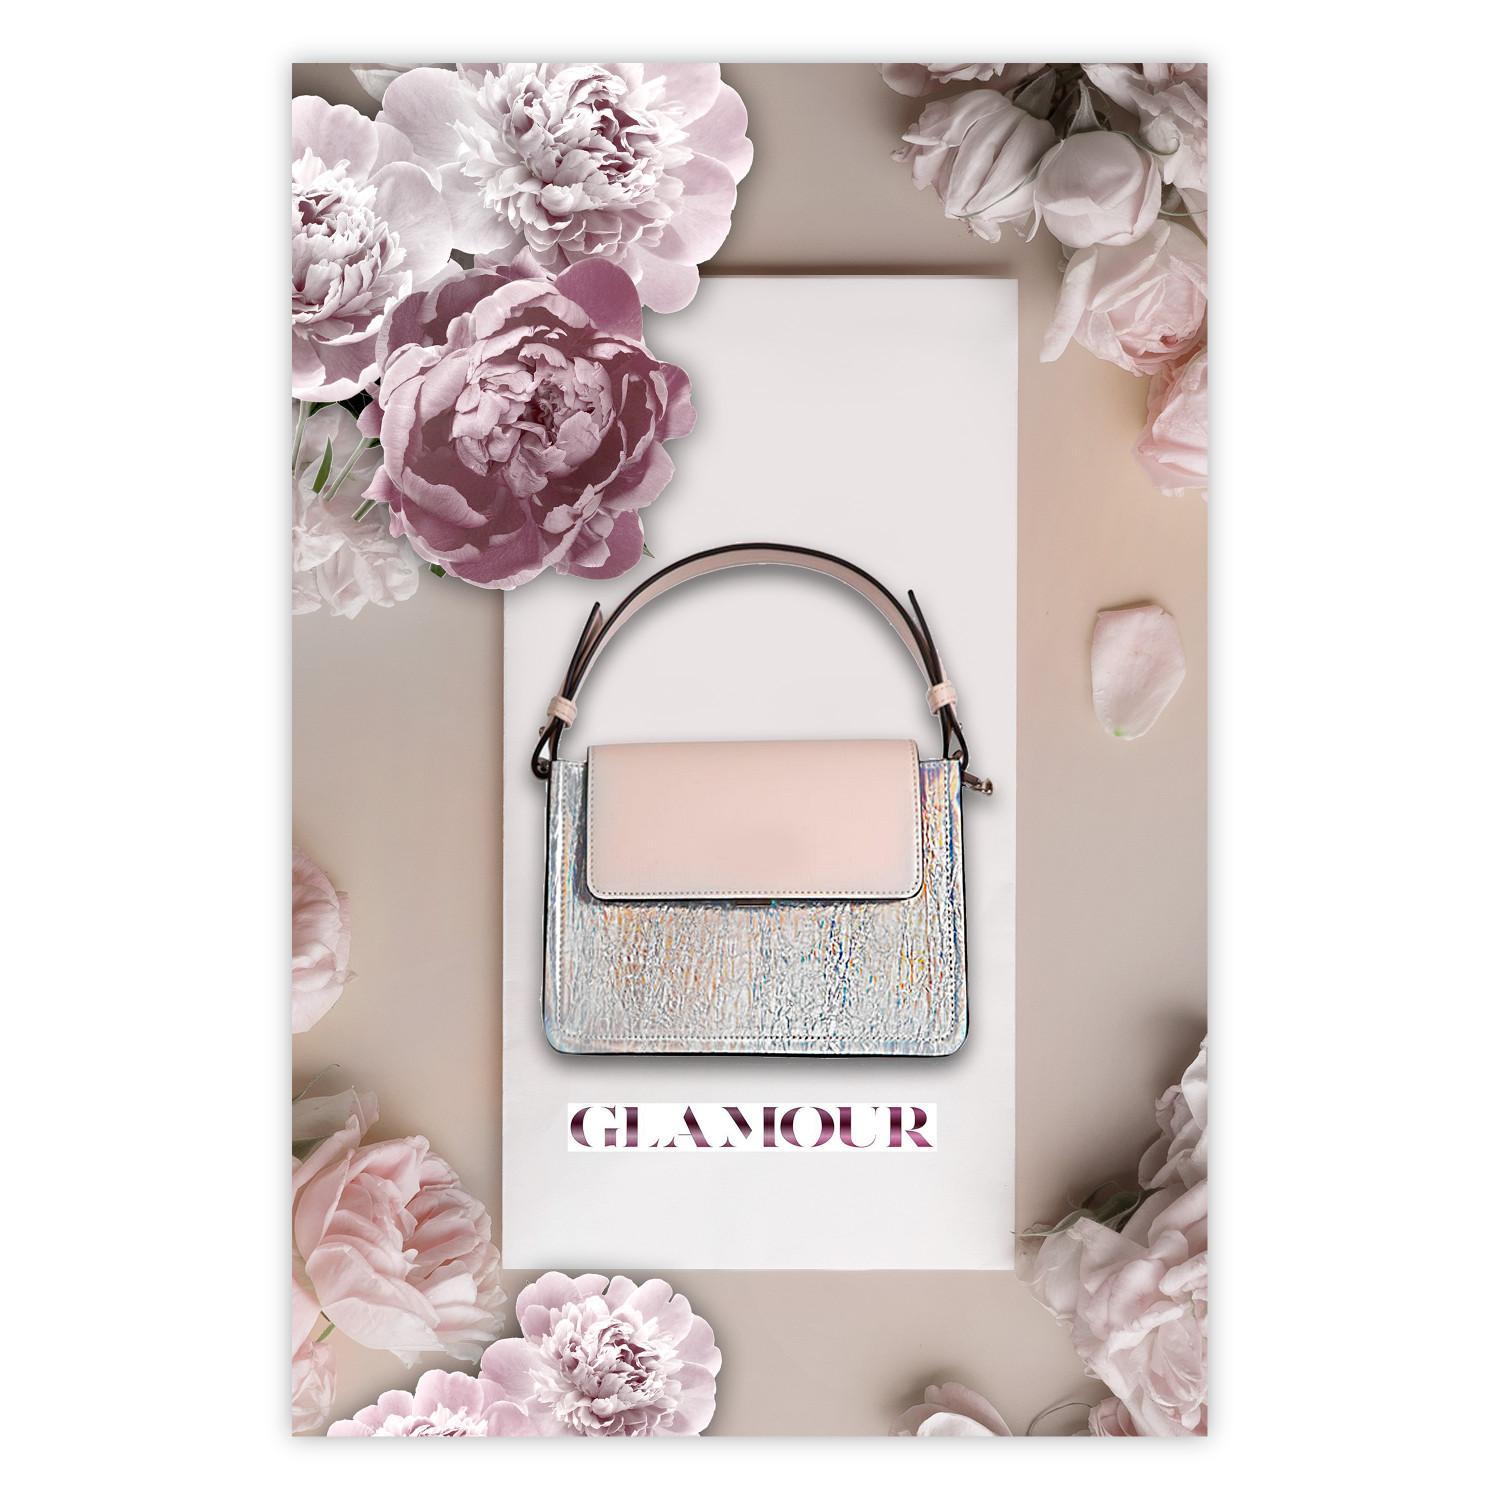 Poster Elegant Handbag - feminine bag on a light background surrounded by flowers